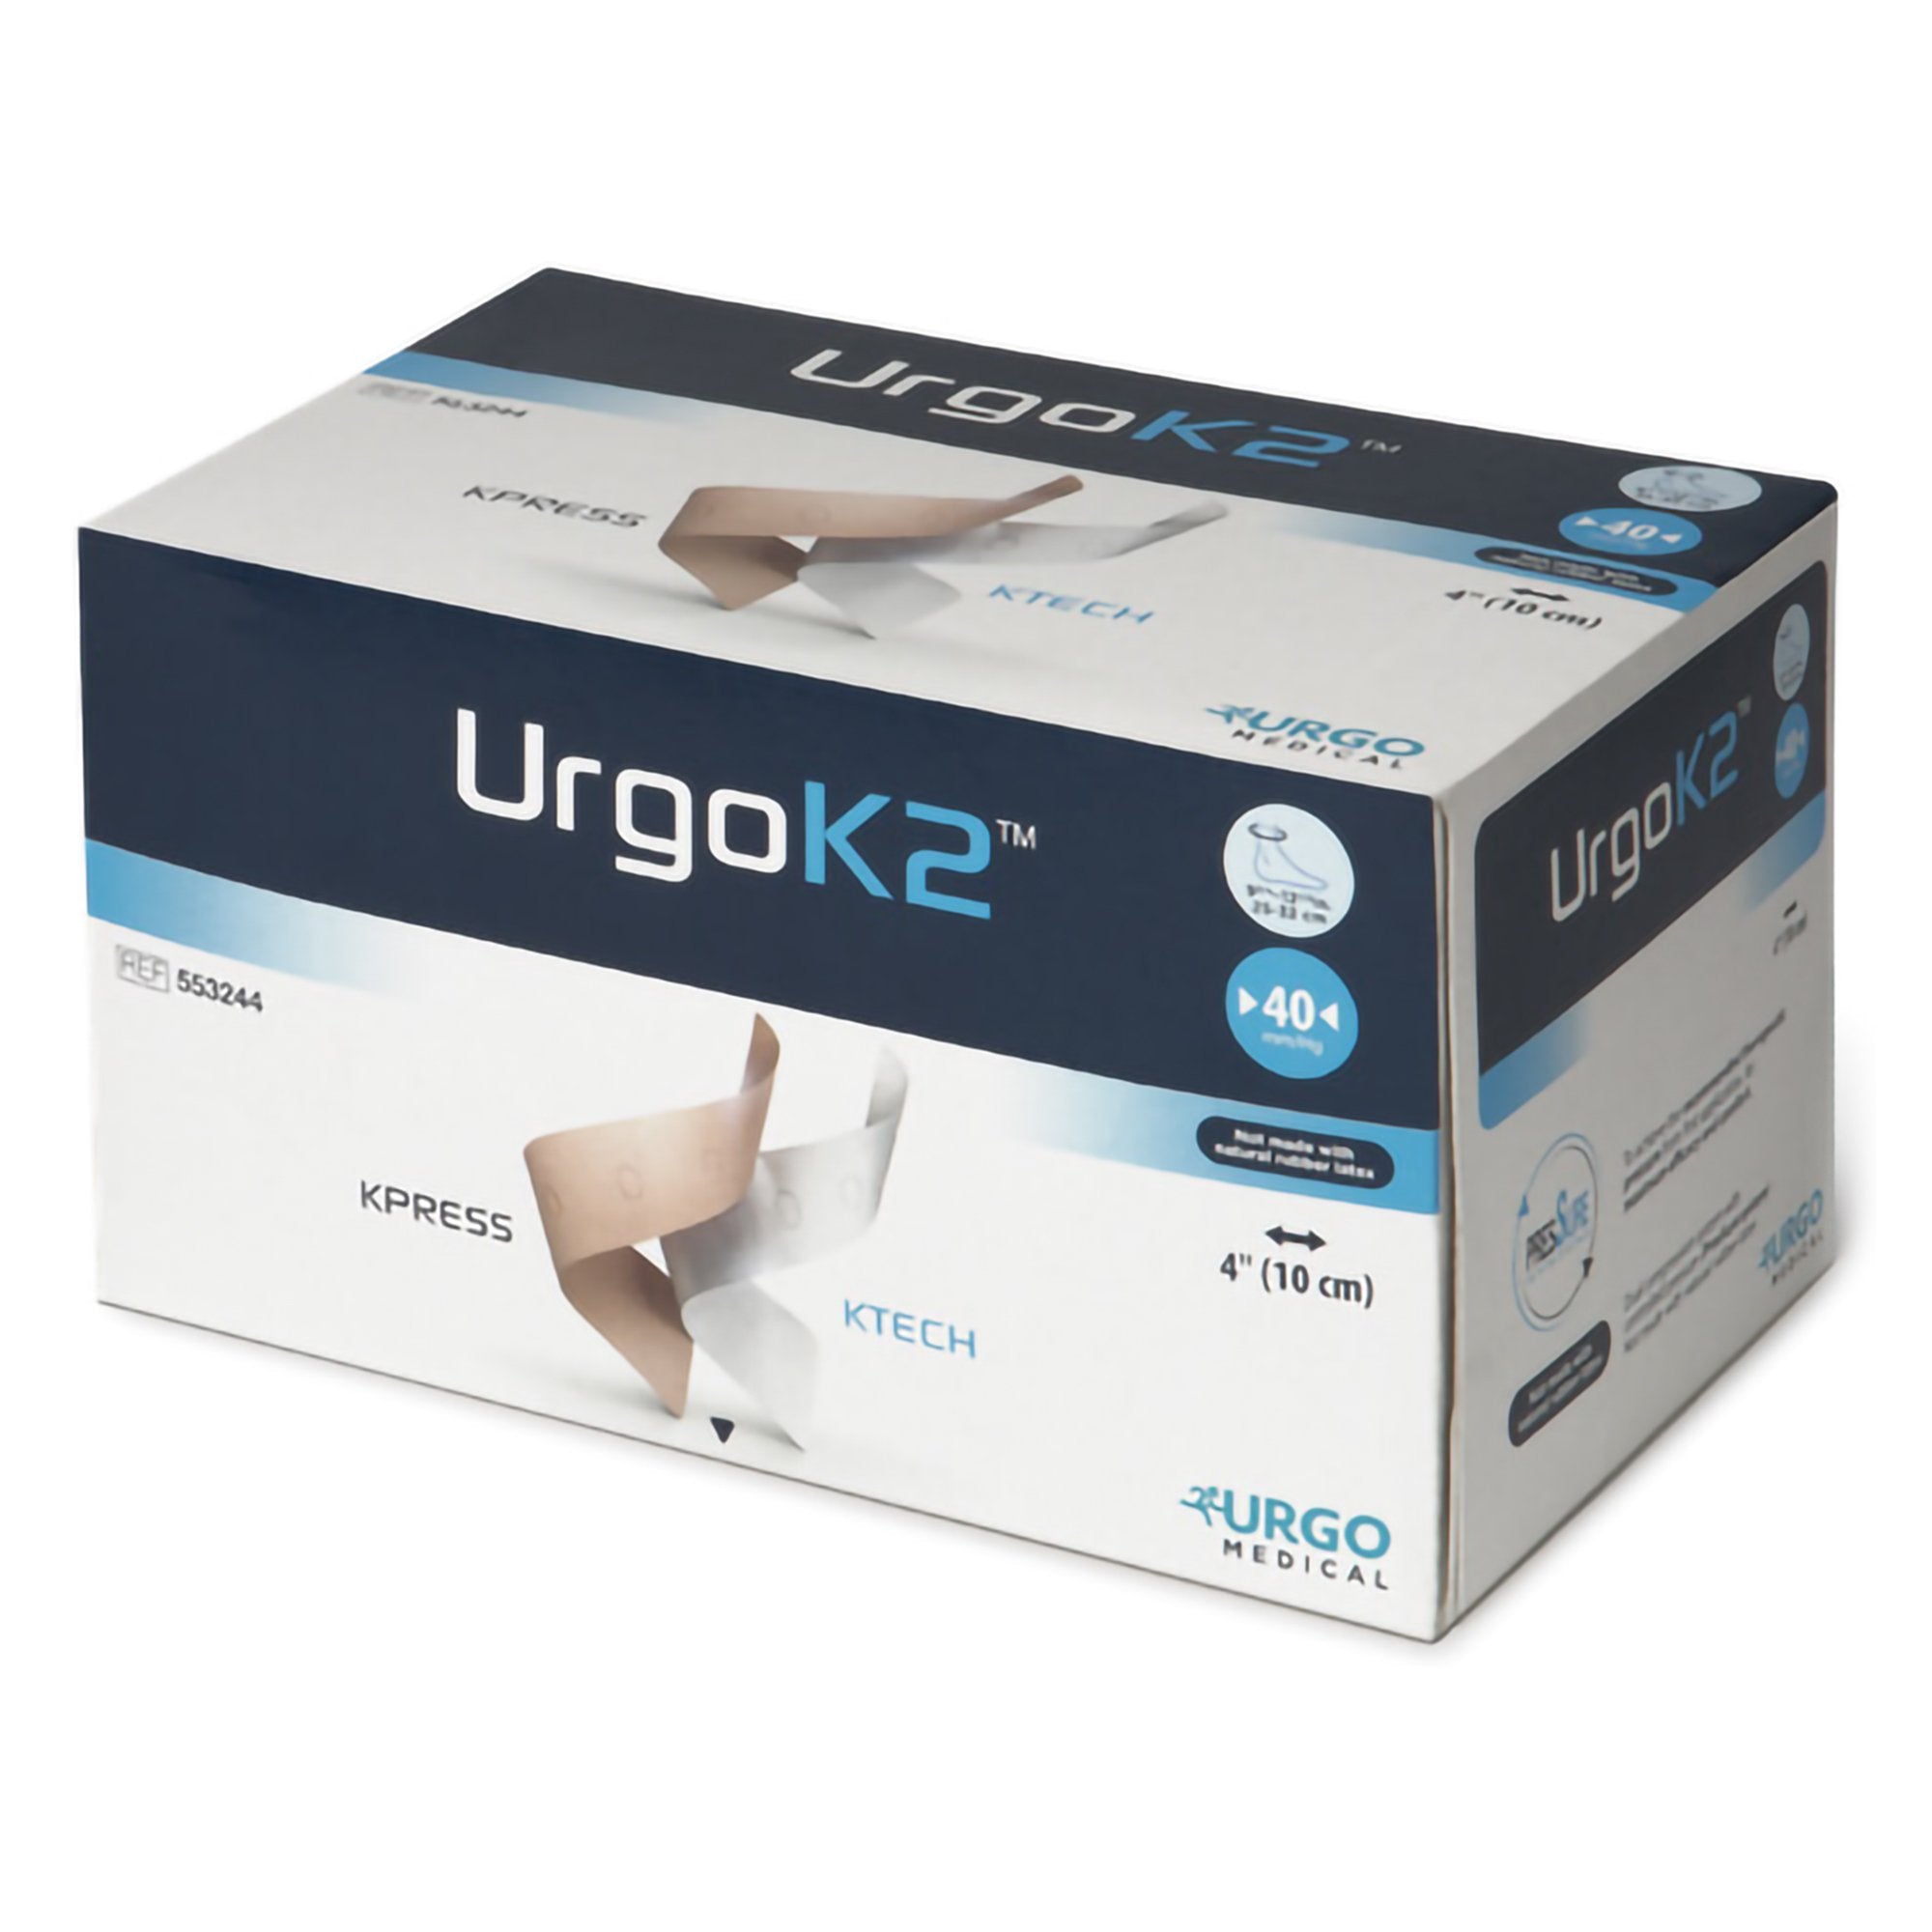 2 Layer Compression Bandage System URGOK2™ 4 X 9-3/4 X 12-1/2 Inch Self-Adherent Closure Tan / White NonSterile Large 40 mmHg